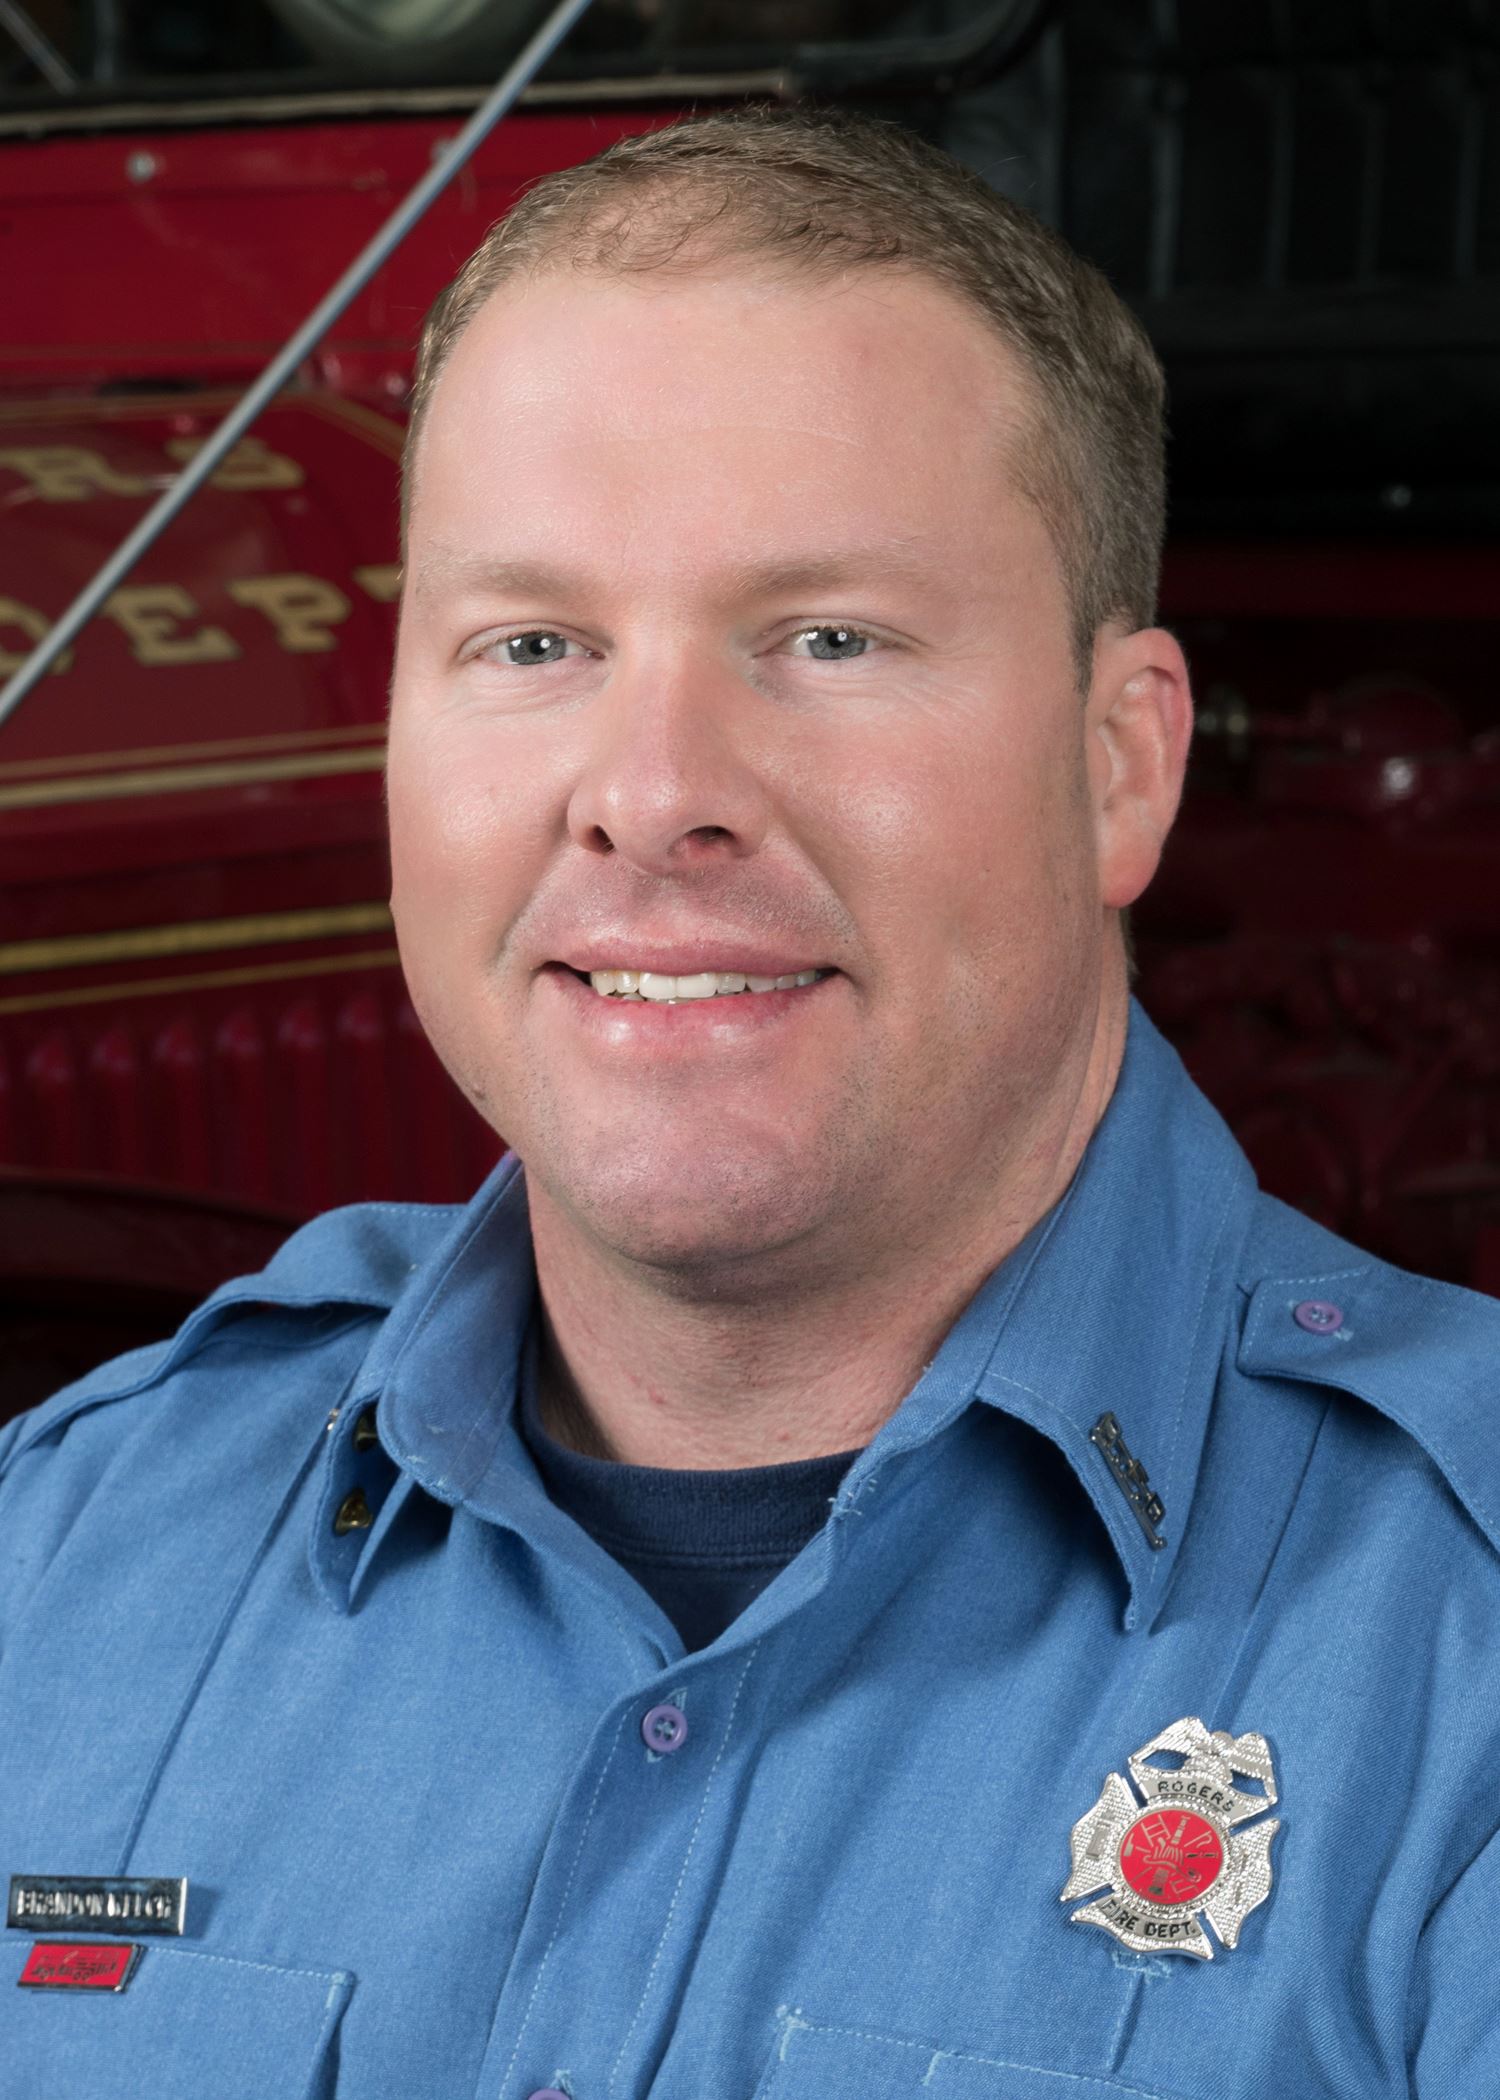 Firefighter Brandon Welch